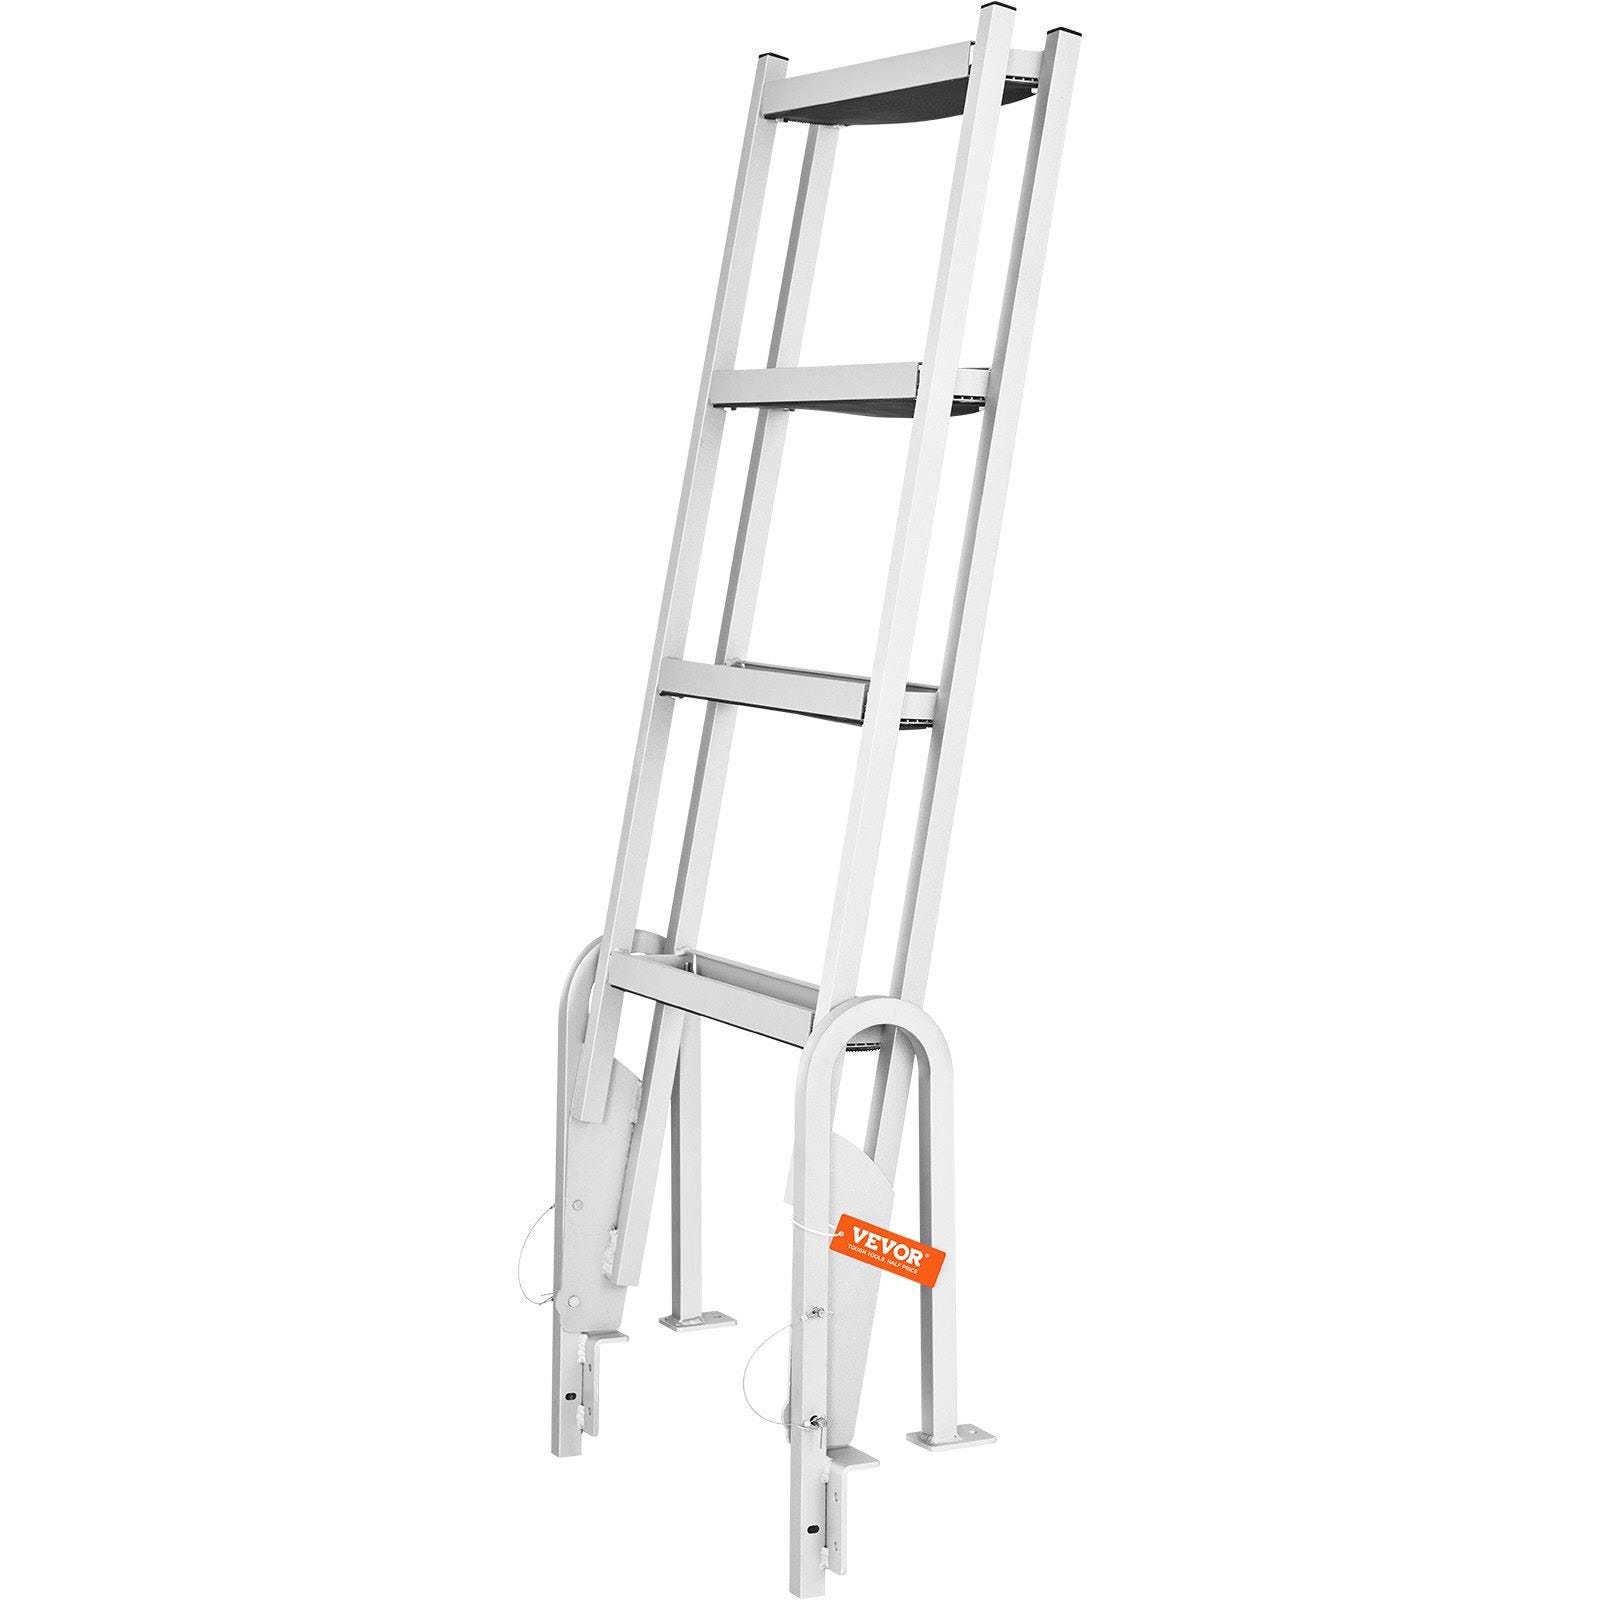 VEVOR Aluminum Flip-Up Dock Ladder with Nonslip Rubber Mat | Image